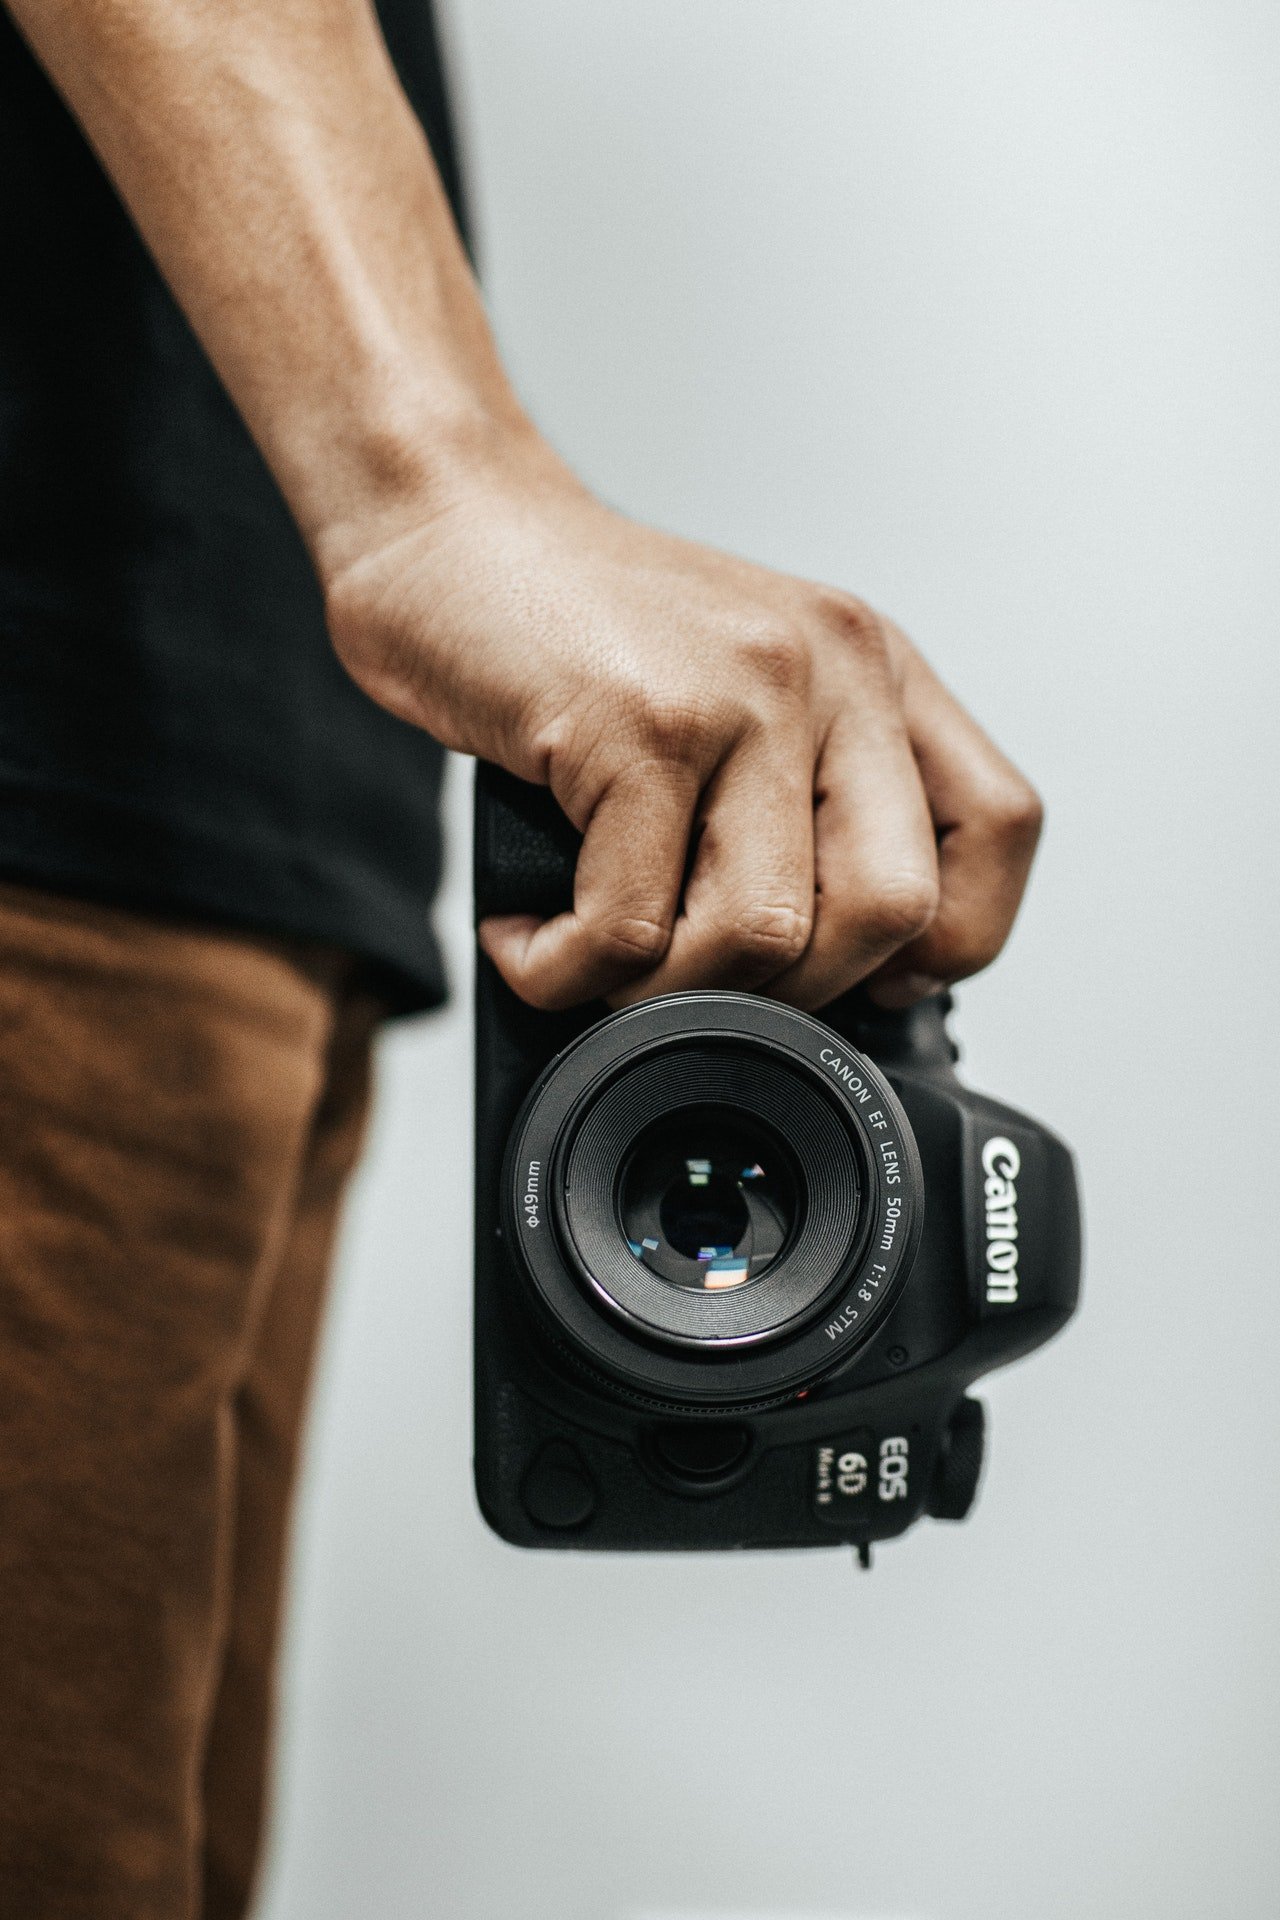 Photo of man holding a camera | Photo: Pexels